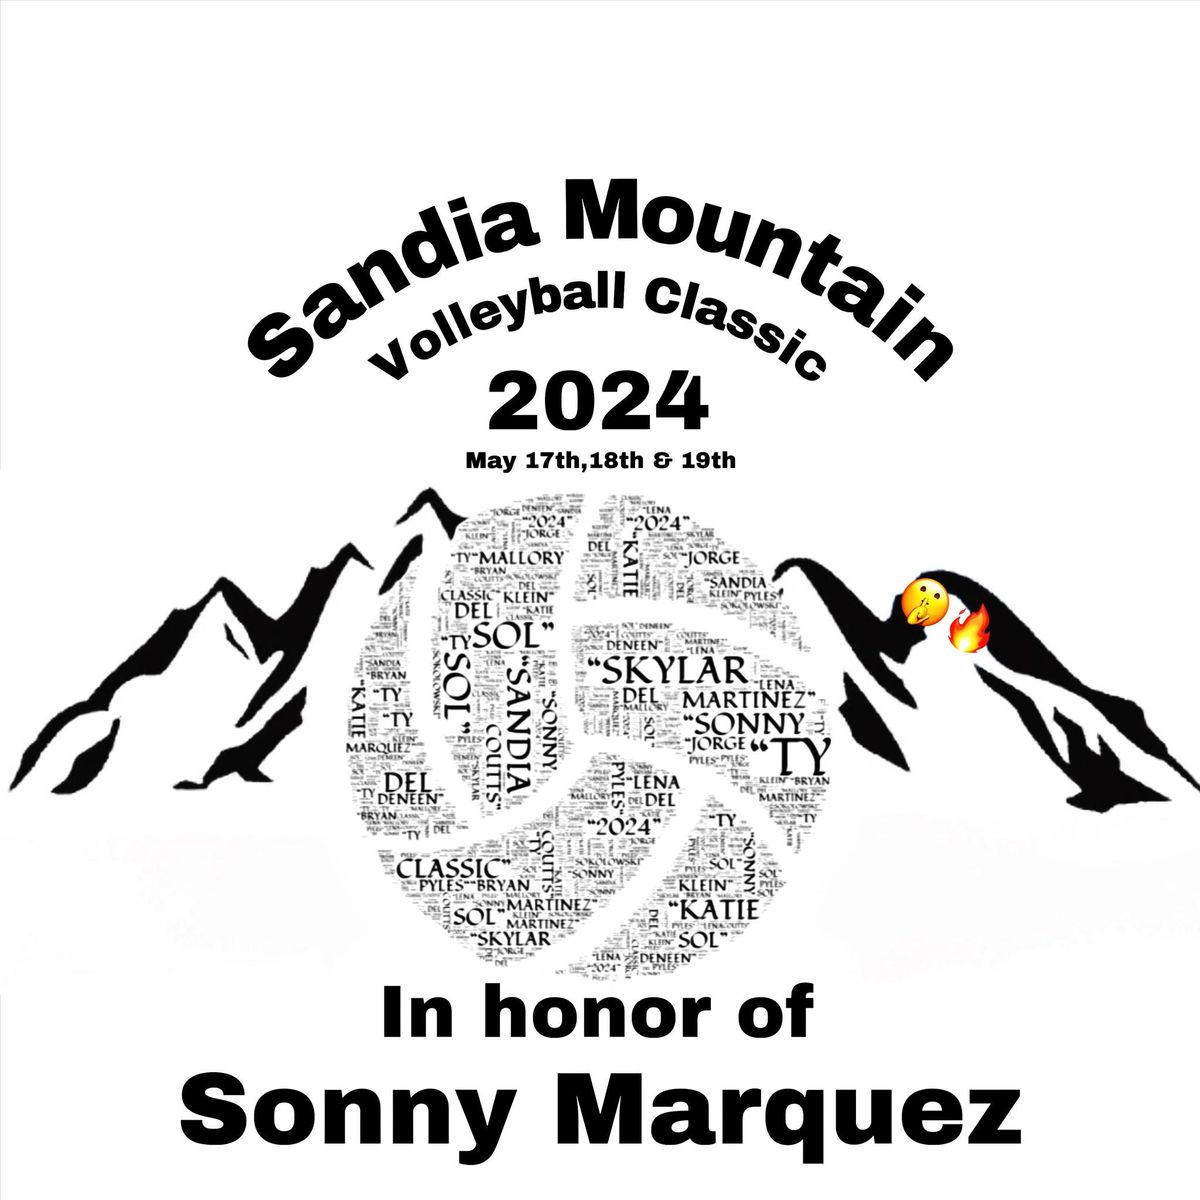 Sandia Mountain Volleyball Classic 